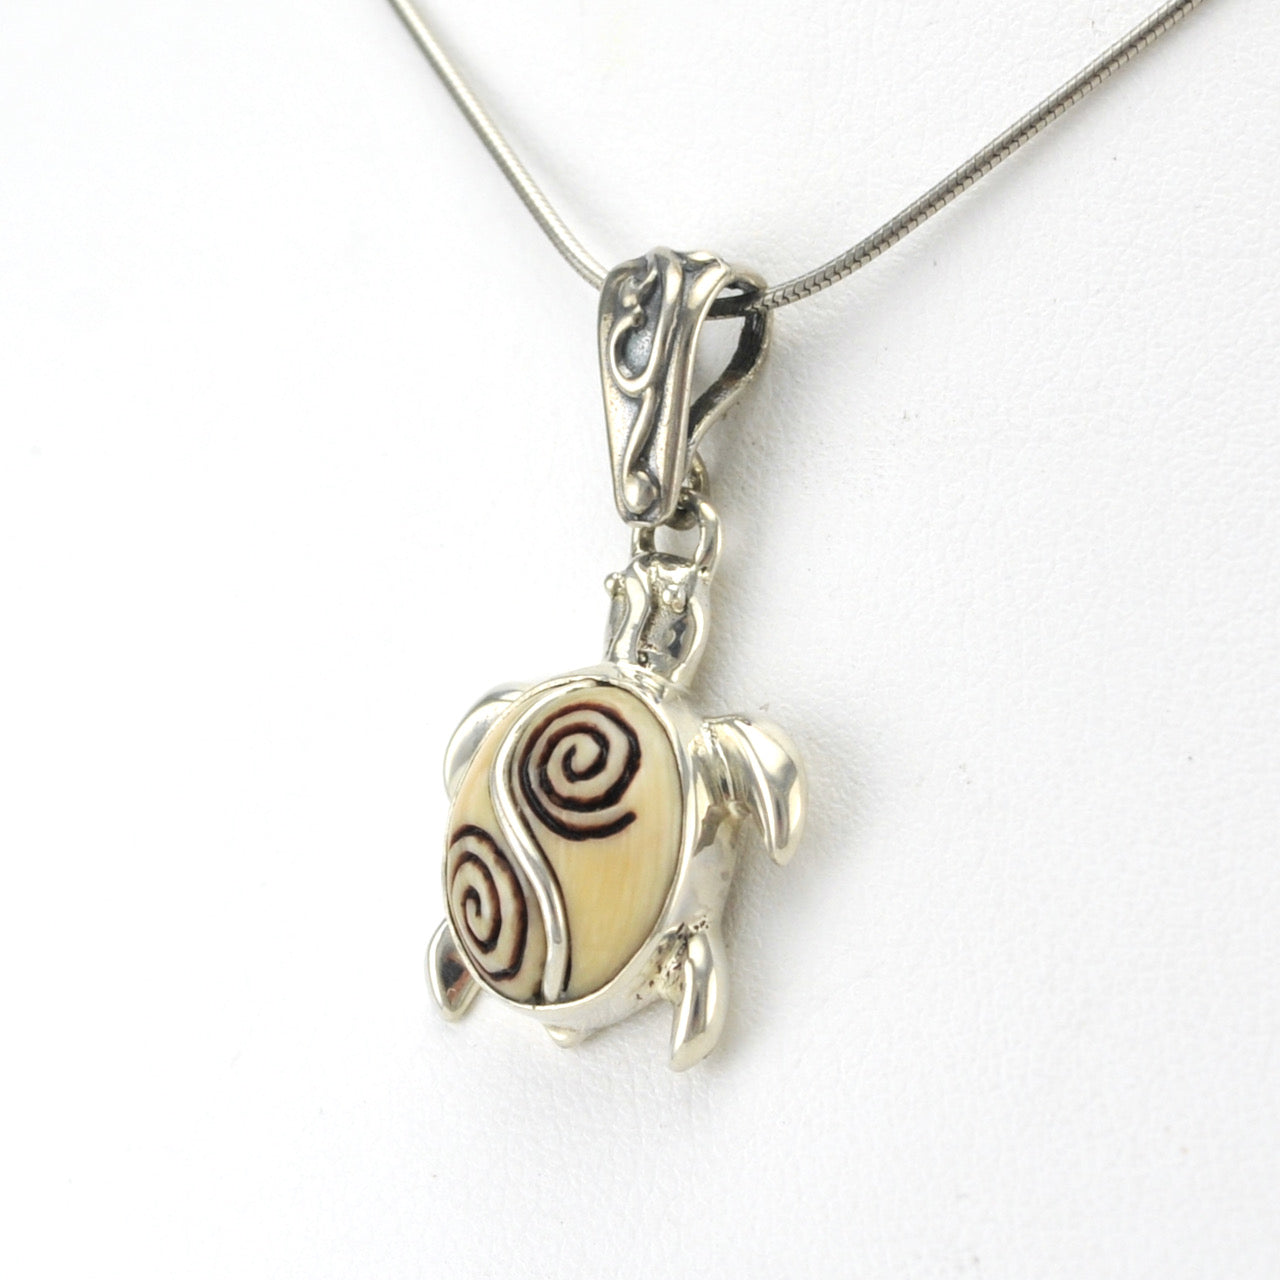 Turtle Sea Glass Necklace